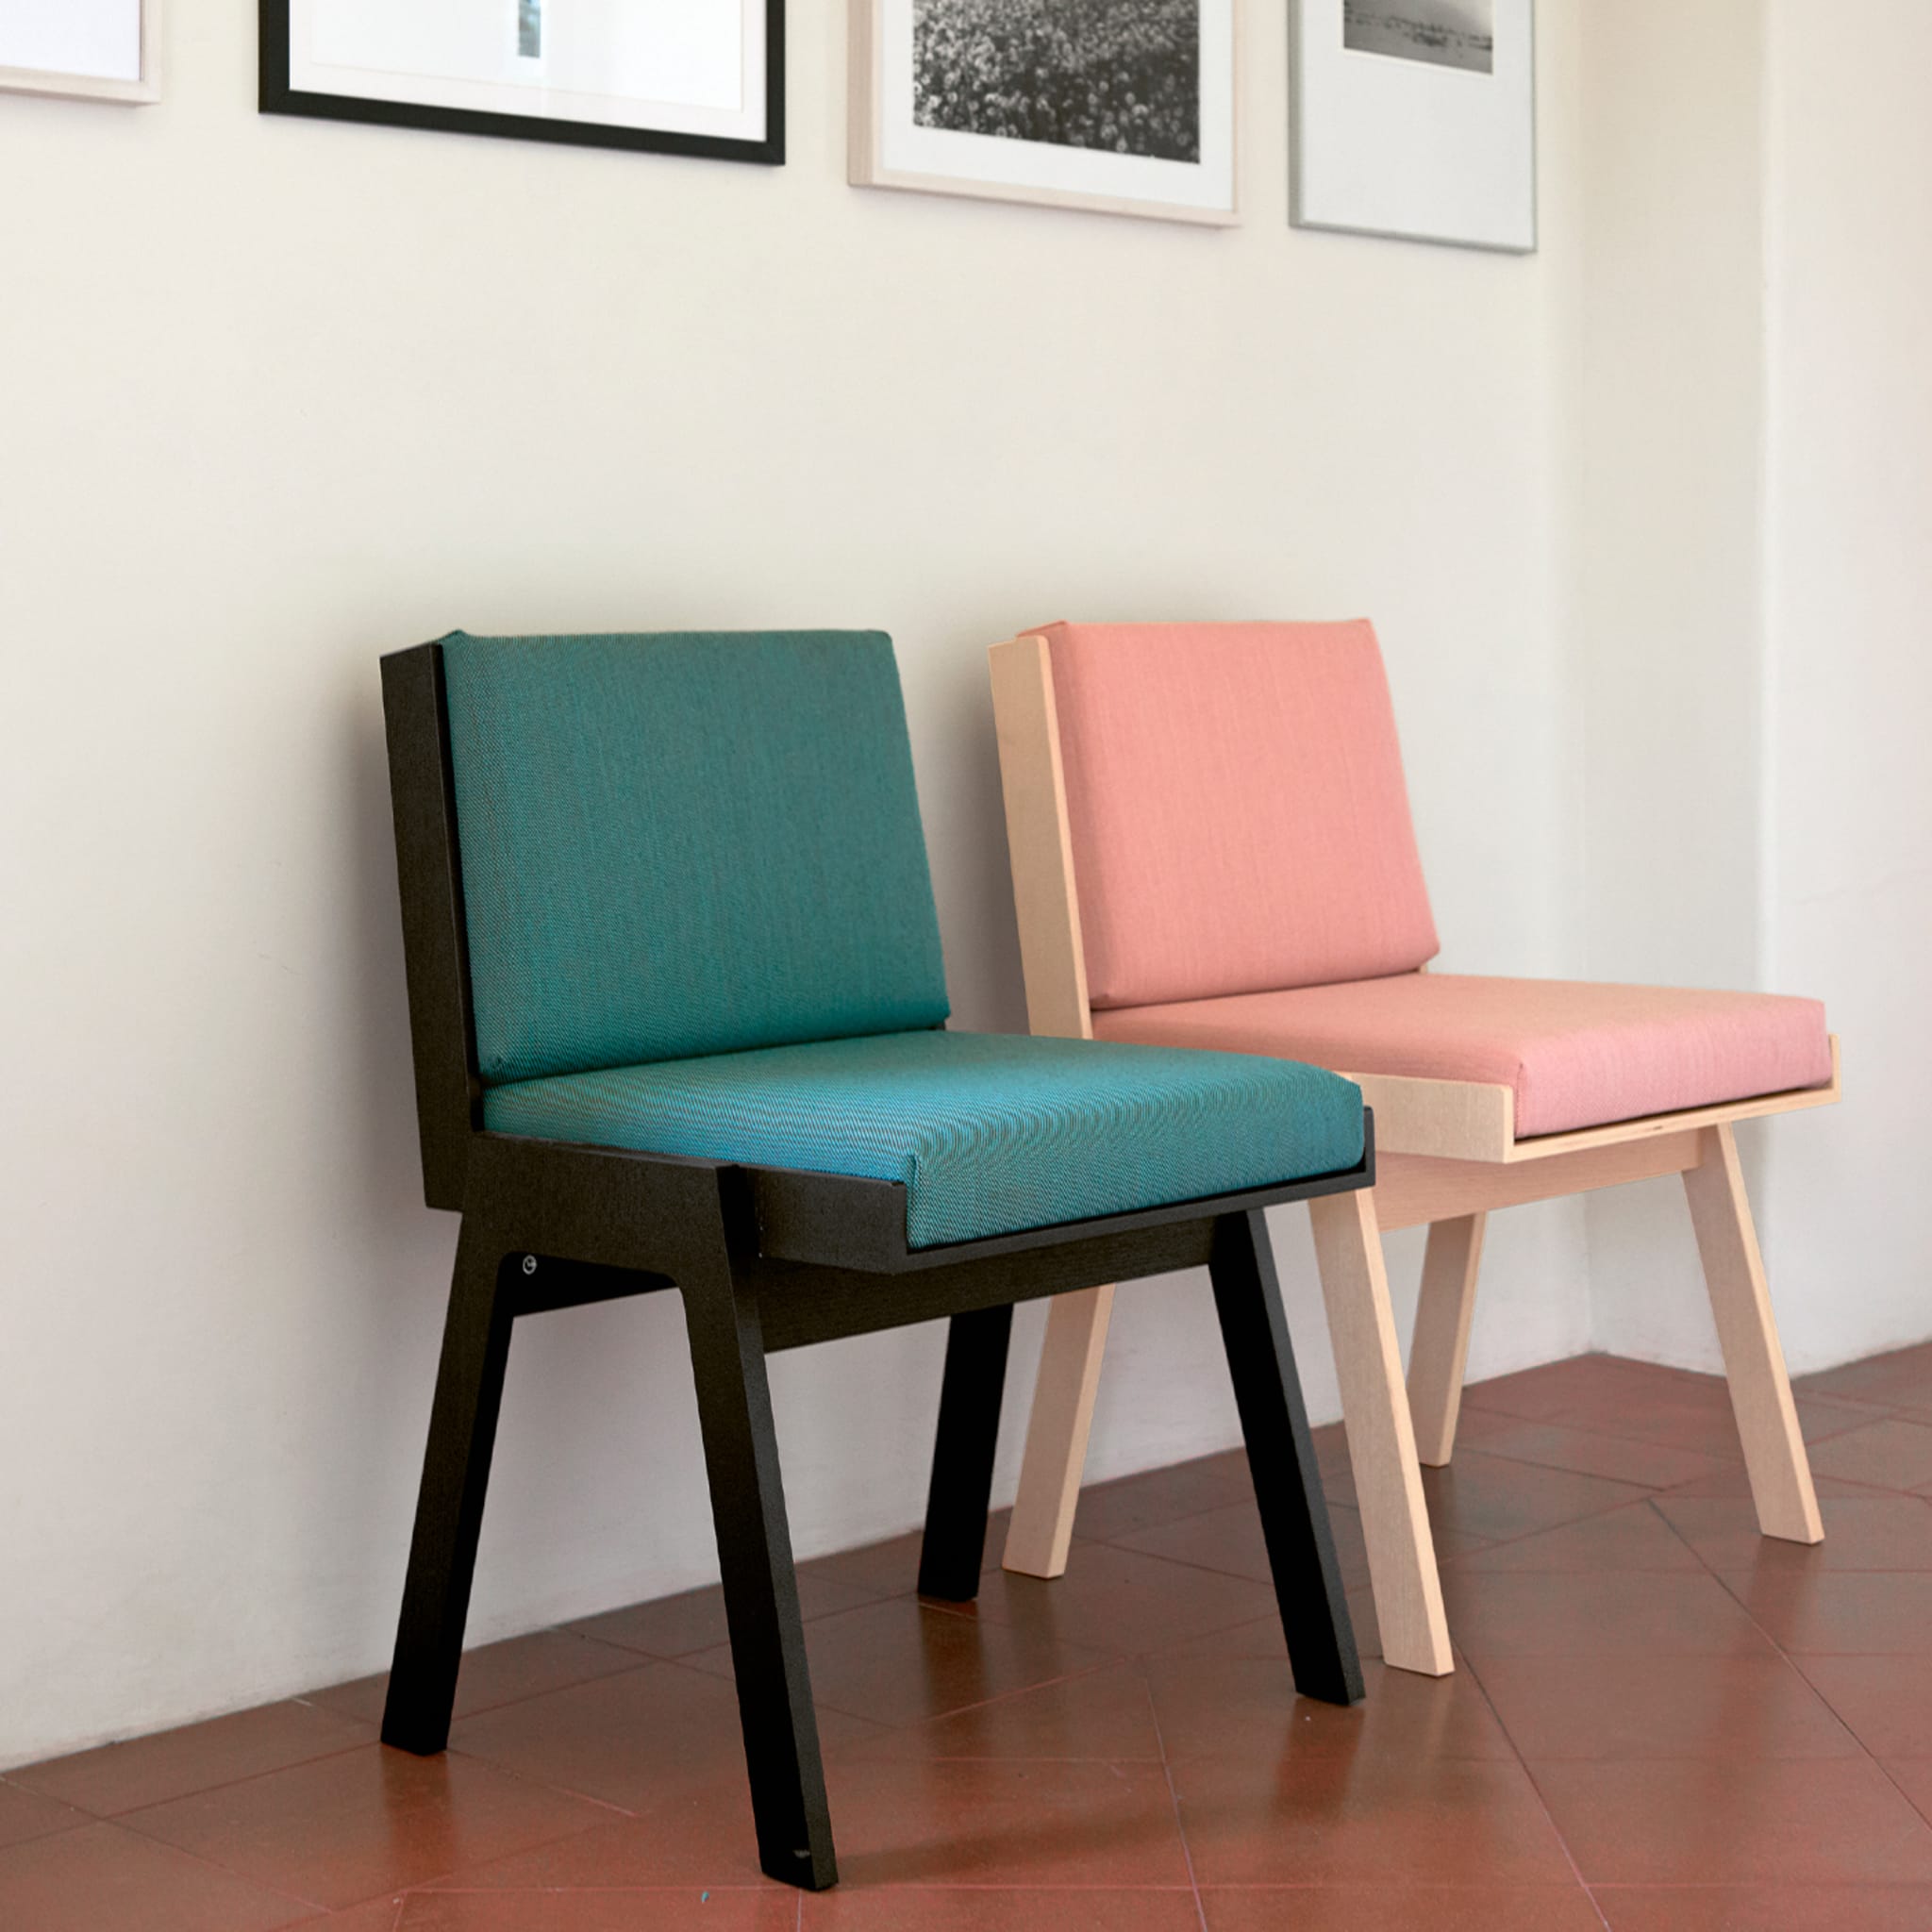 Club 44 Blue Chair by Angelo Mangiarotti - Alternative view 1